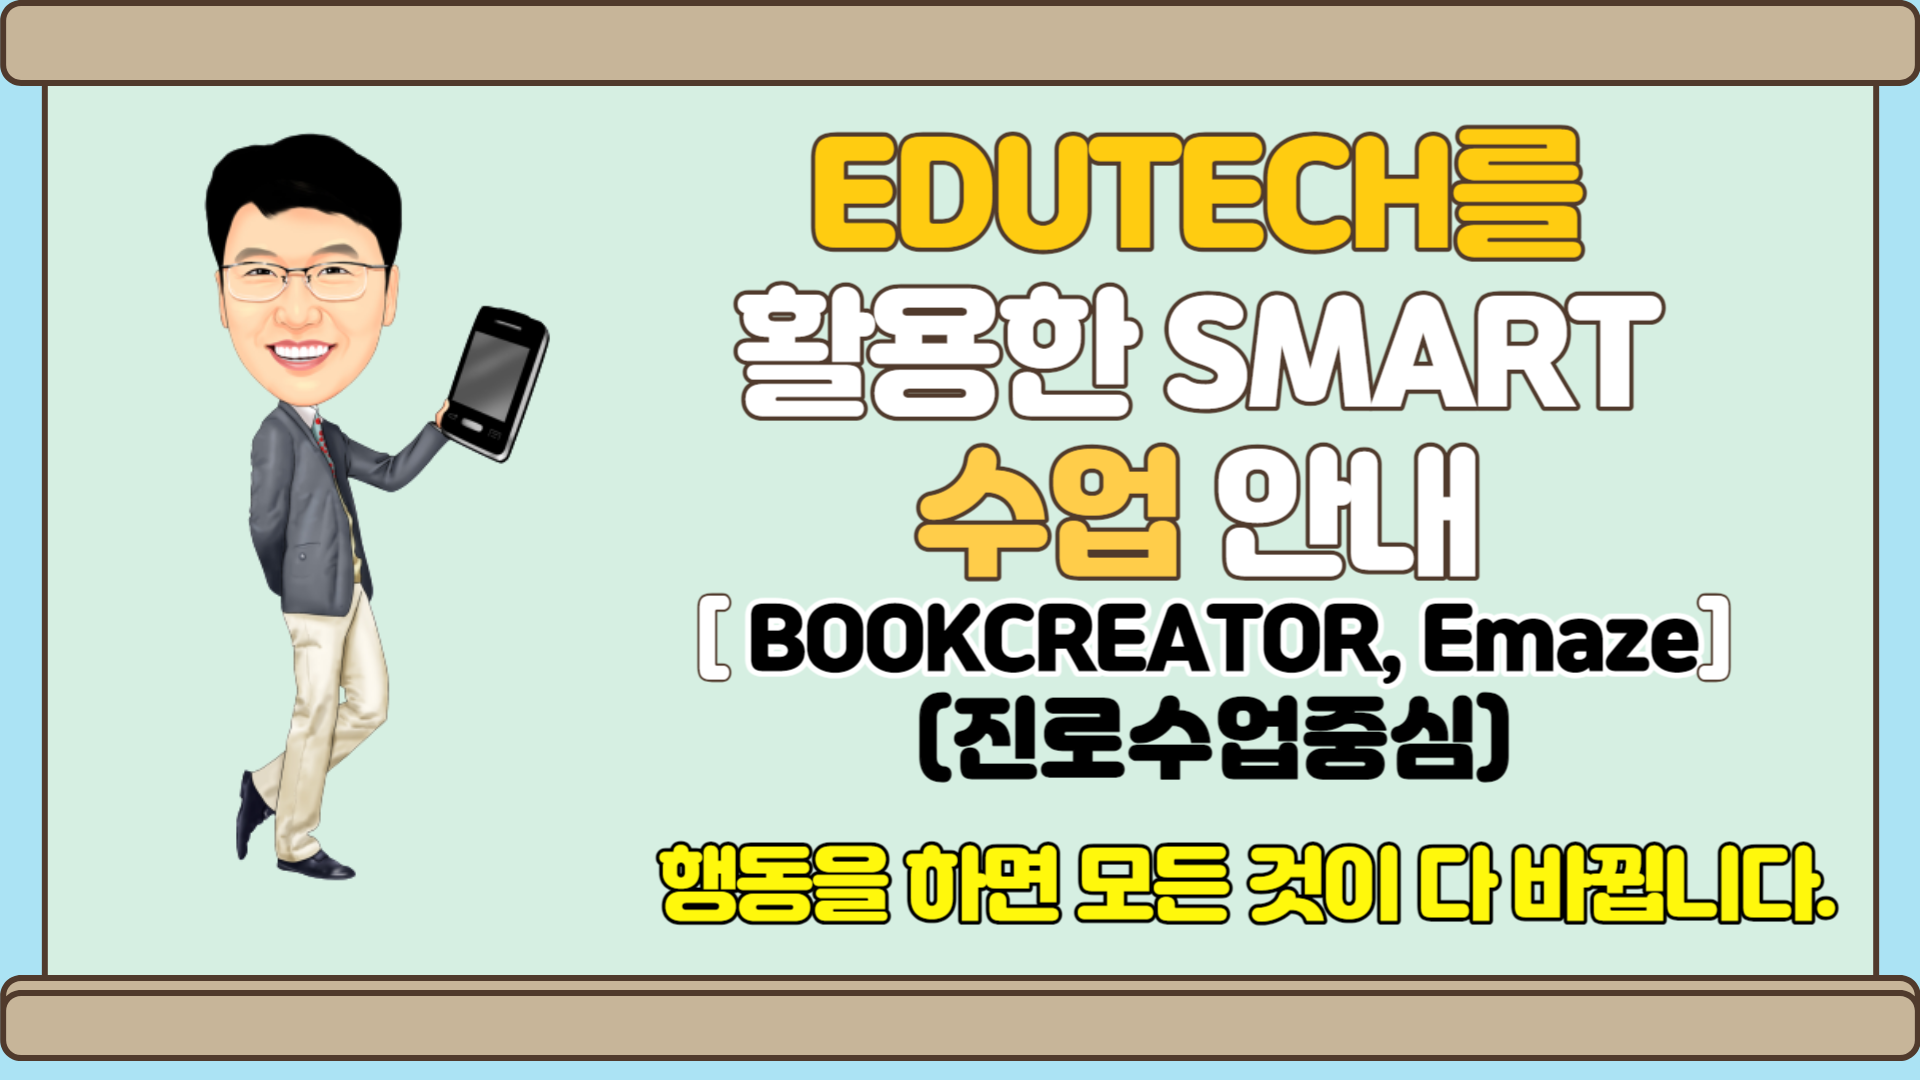 EDUTECH를 활용한 smart 수업 방법 안내 (bookcreator, EMAZE) 